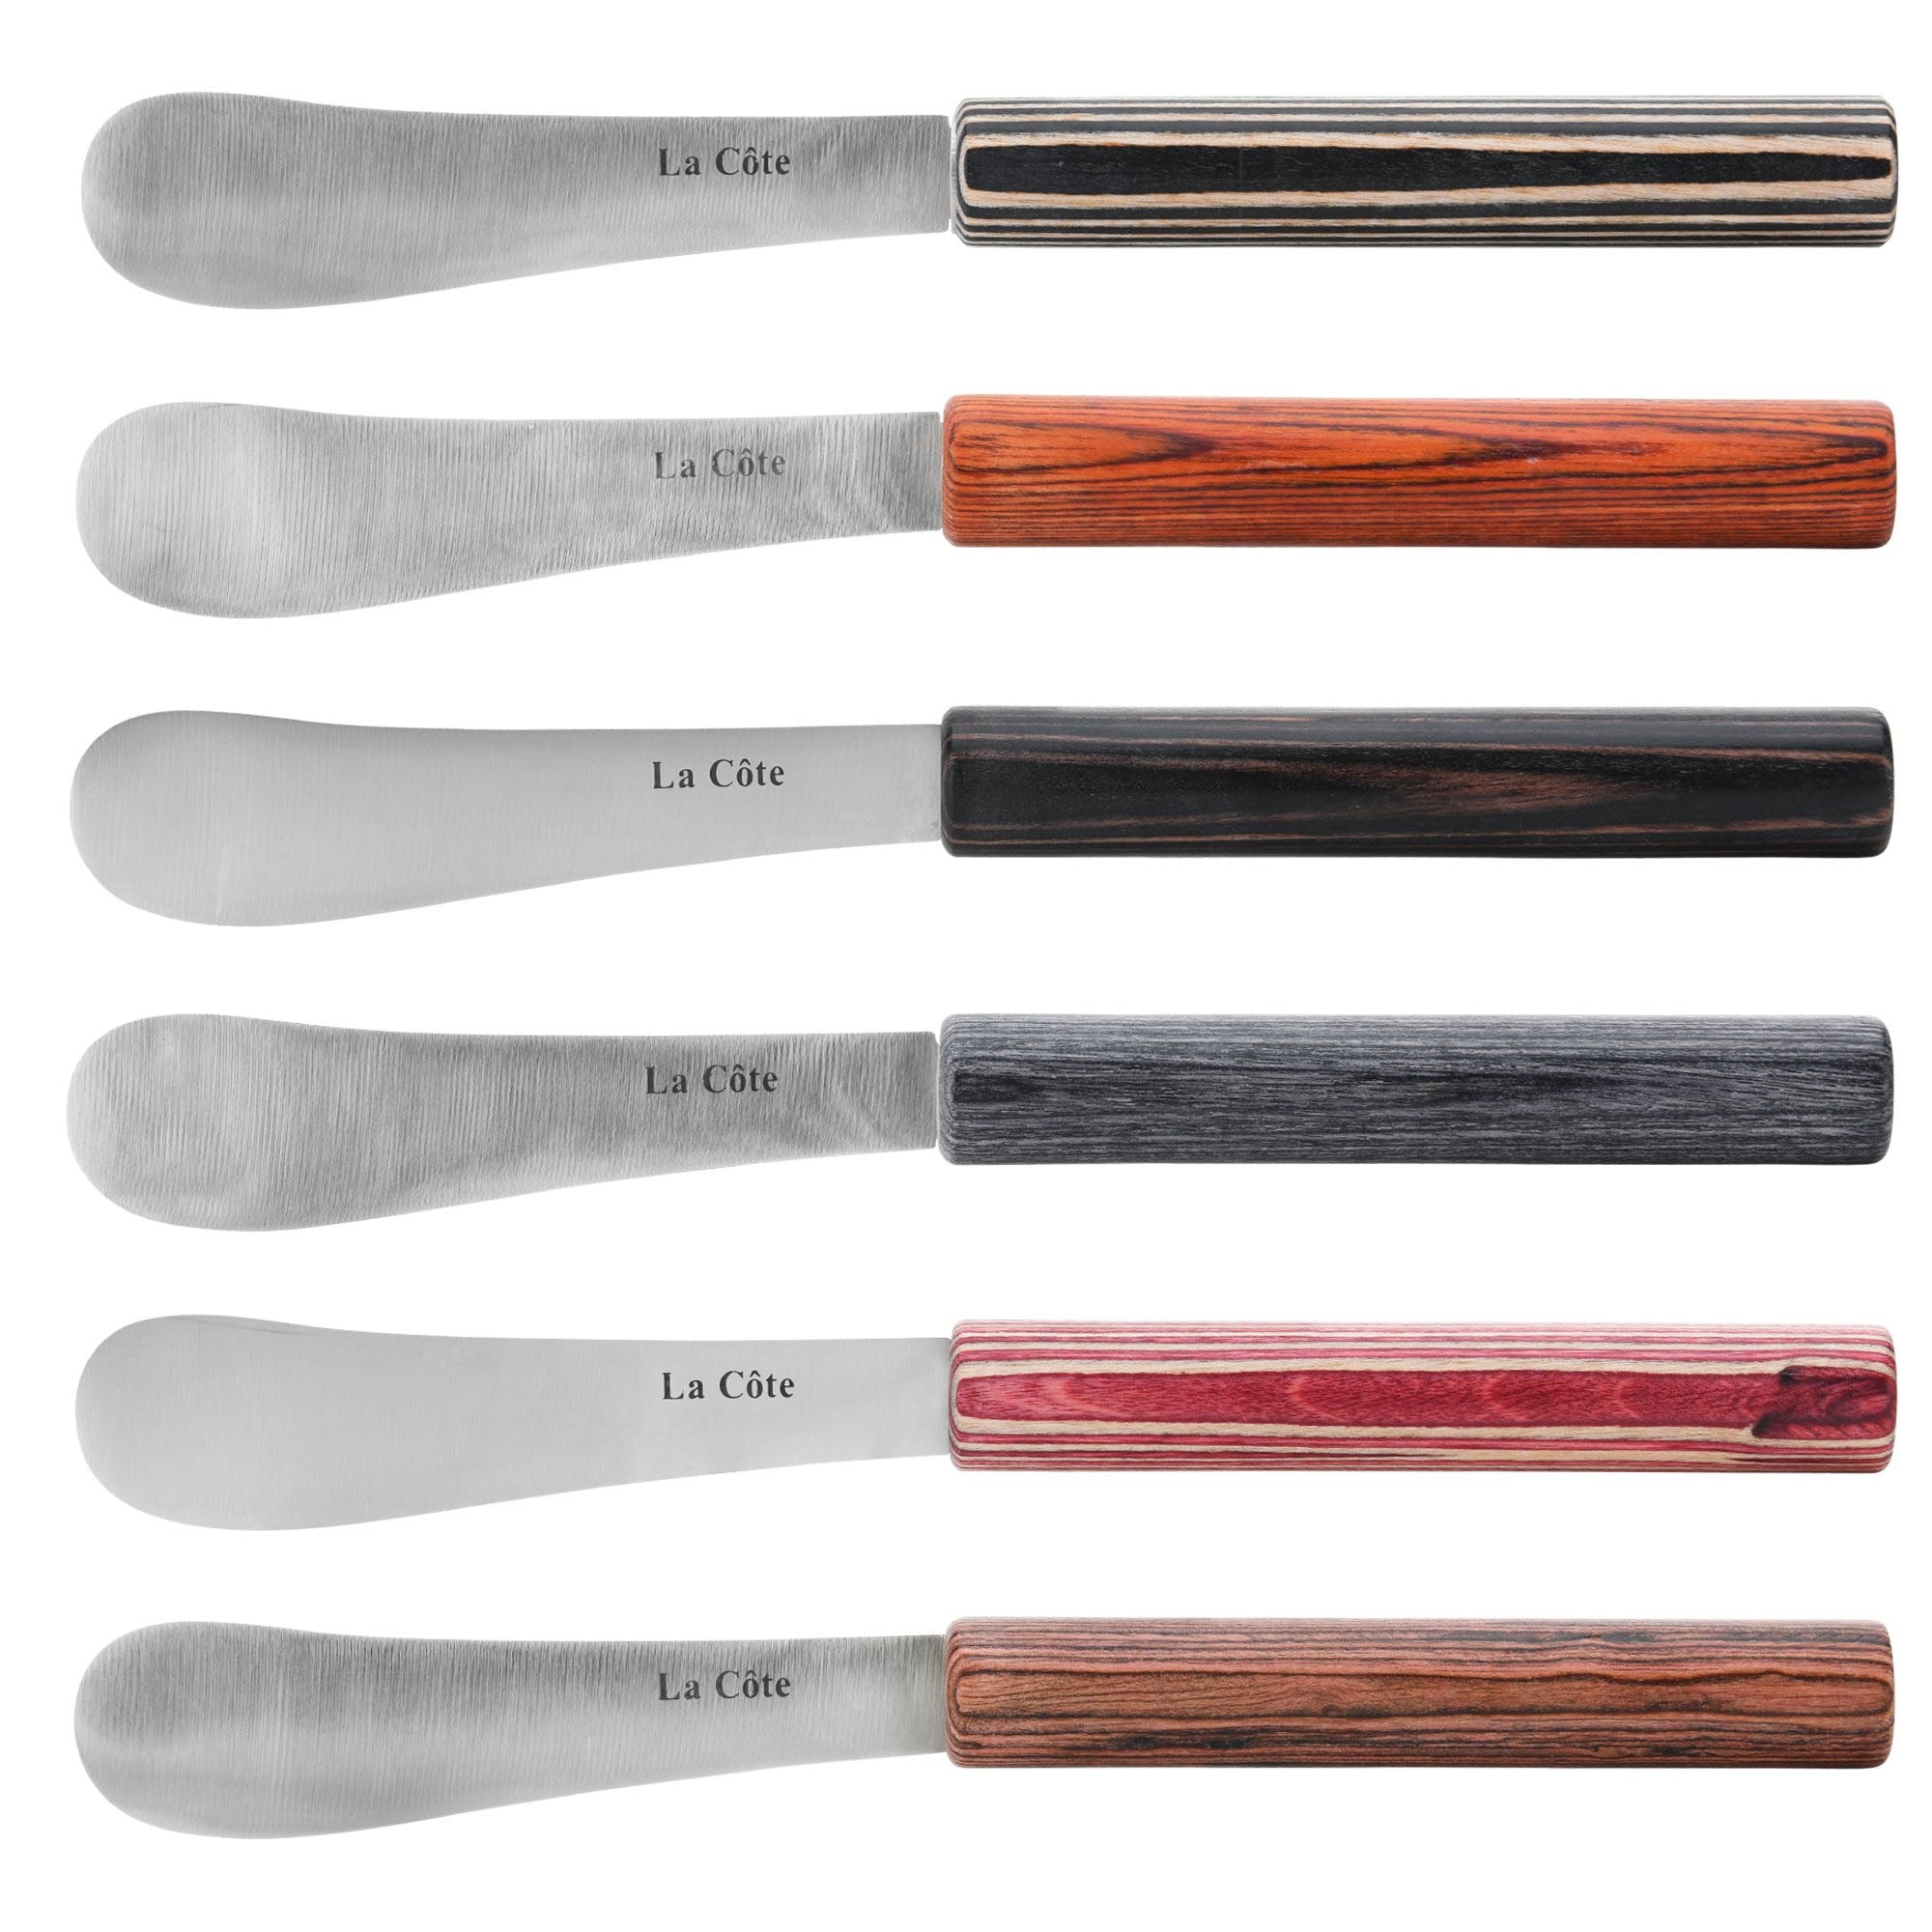 La Cote 6 Piece Cheese Knife Spreader Set Stainless Steel Blade Pakka Wood Handle (7.5 inch)